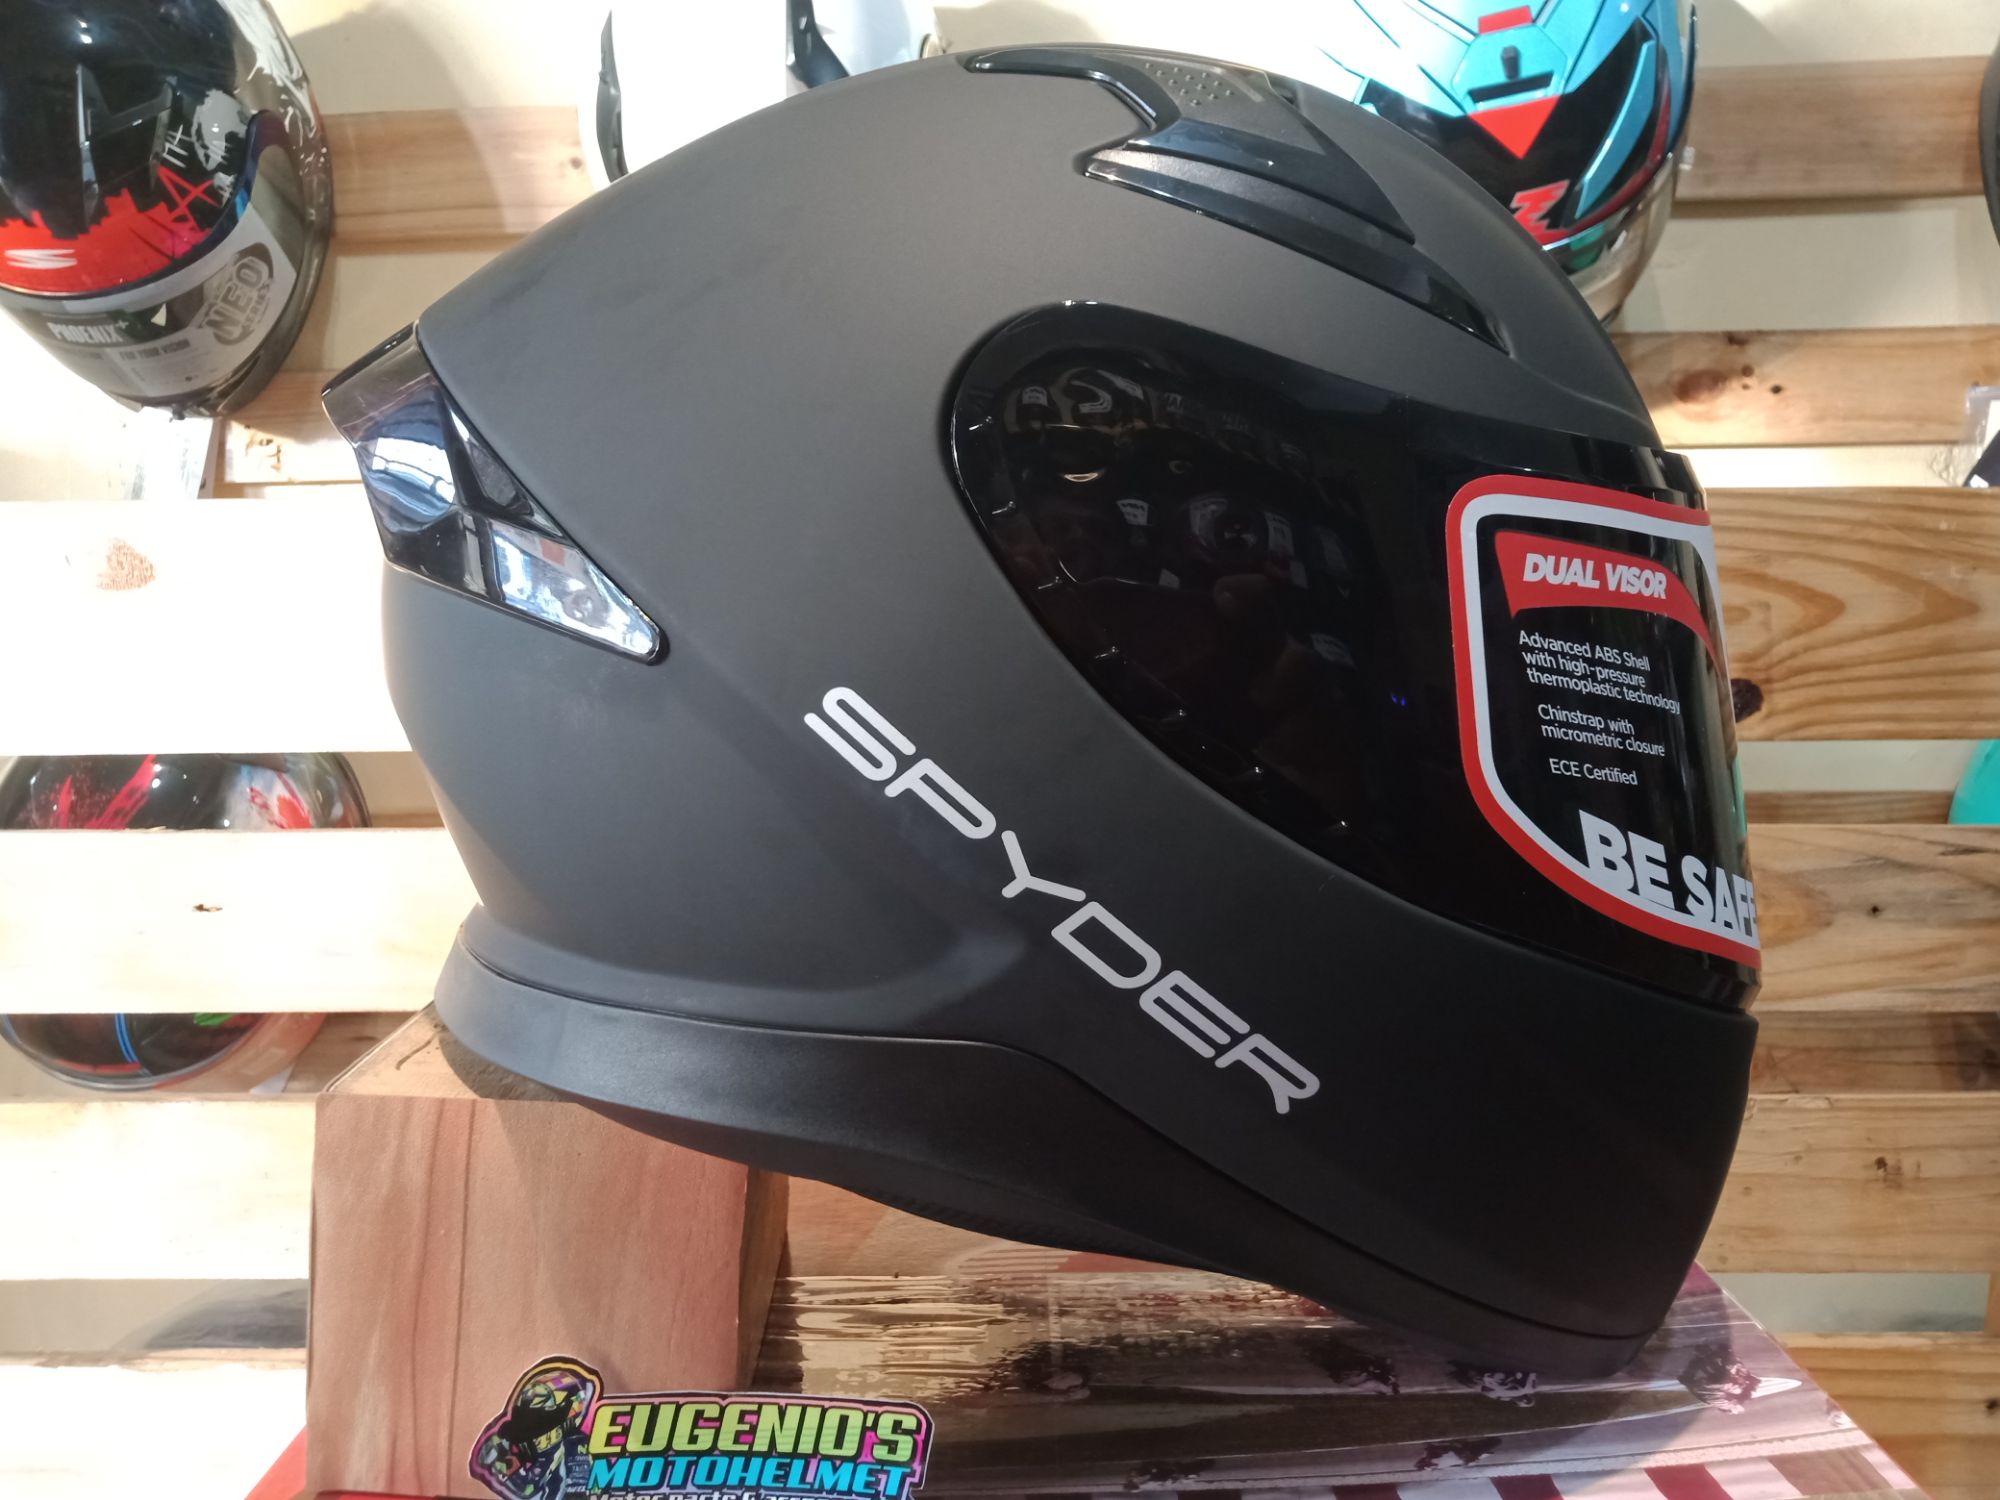 Spyder Helmet Original Price | atelier-yuwa.ciao.jp